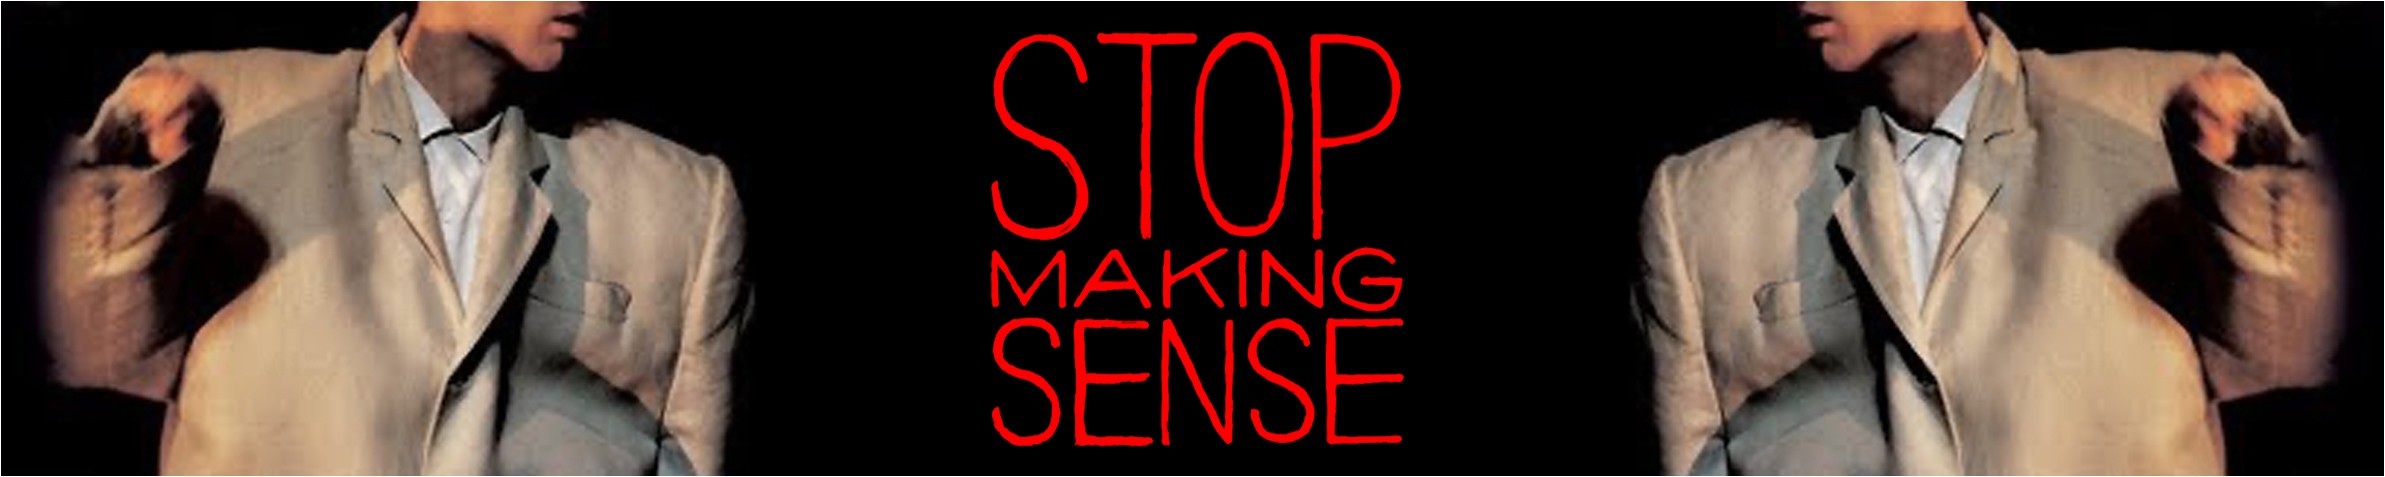 STOP MAKING SENSE - NEW 4K RESTORATION!!!